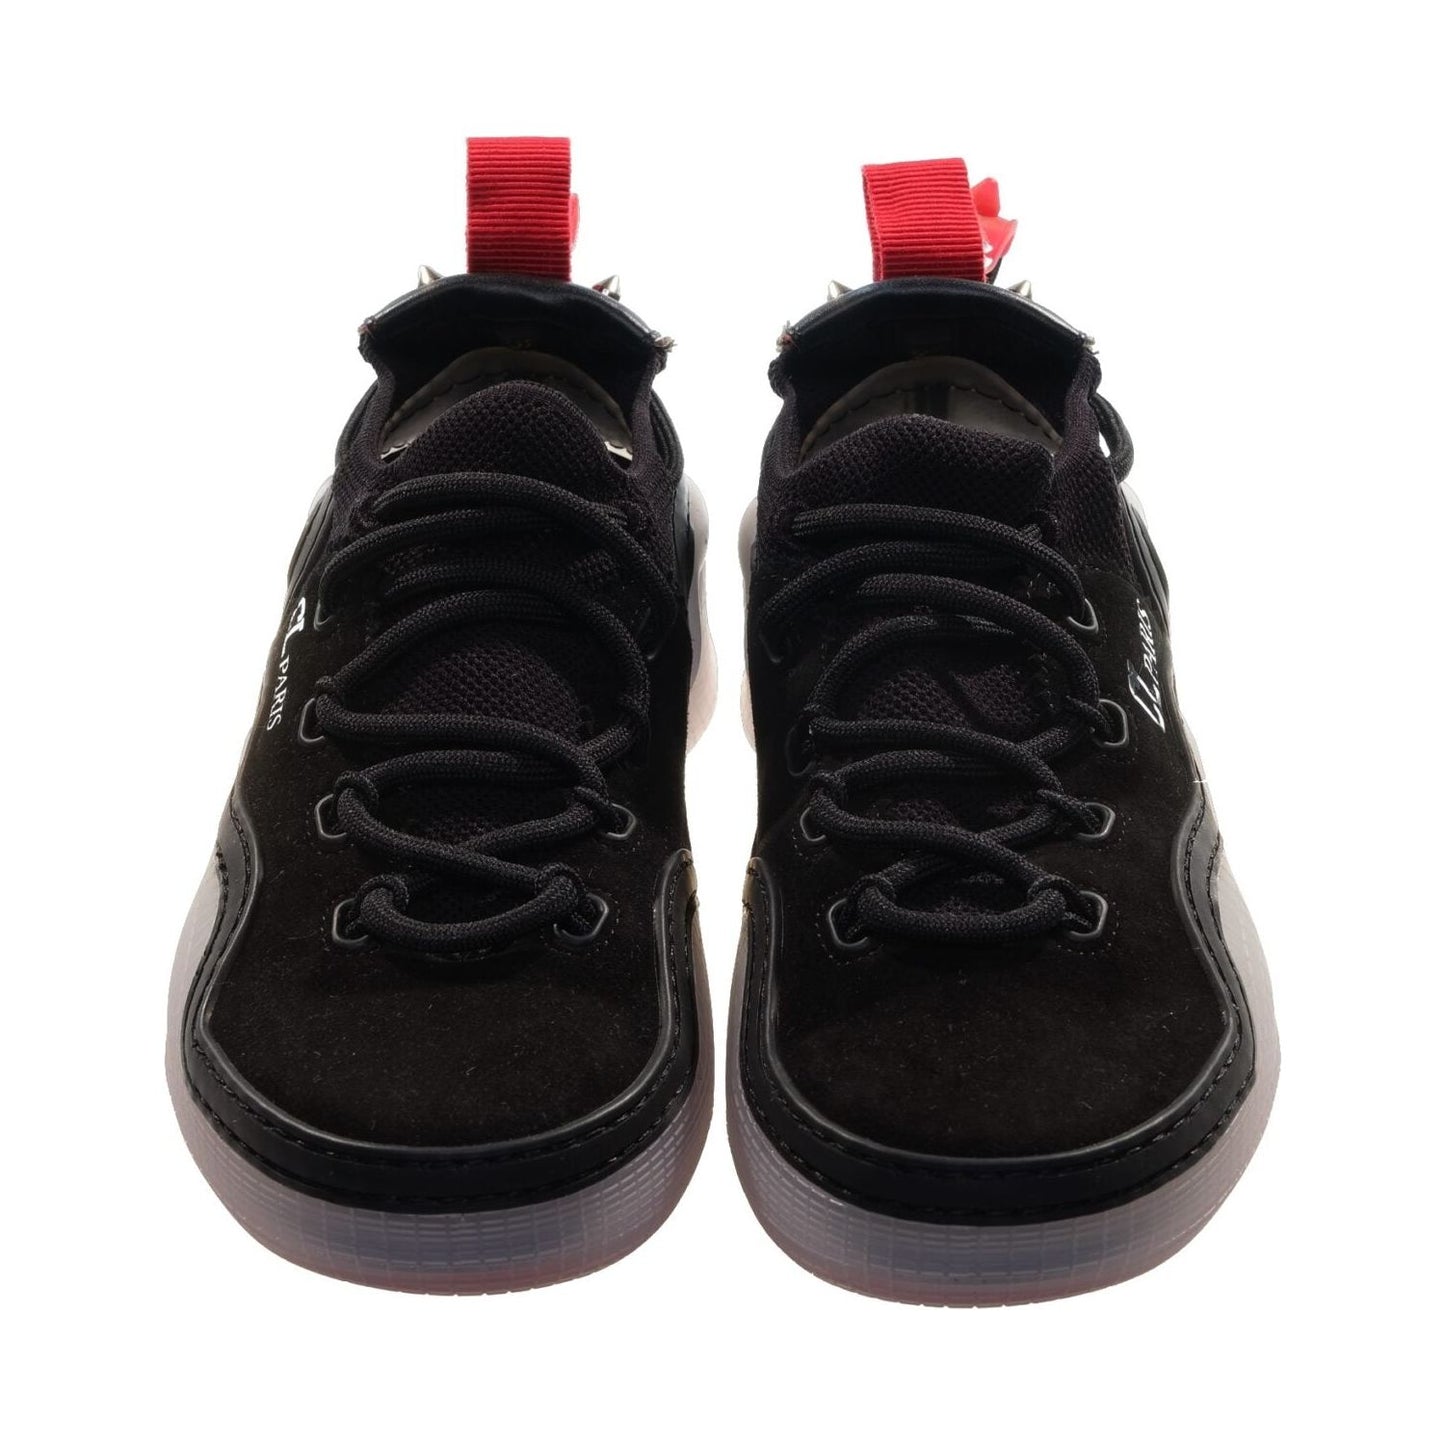 Arpoador Donna Flat Black Laceup Suede Sneakers